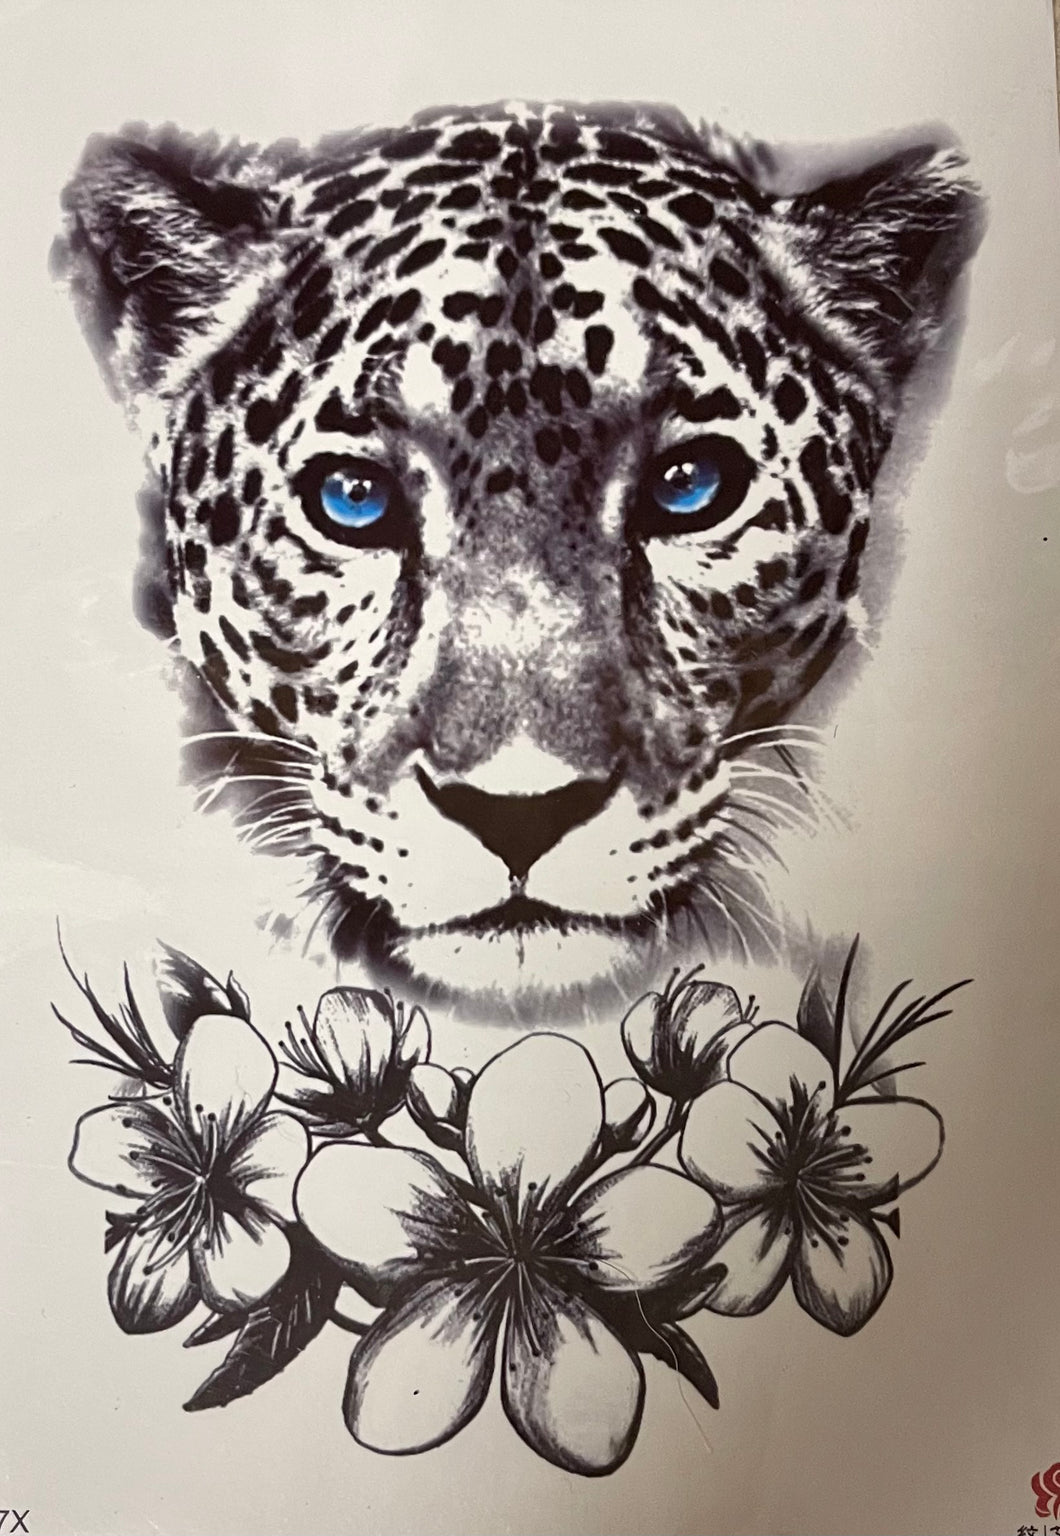 Cheetah with blue eyes Tattoo 8x5